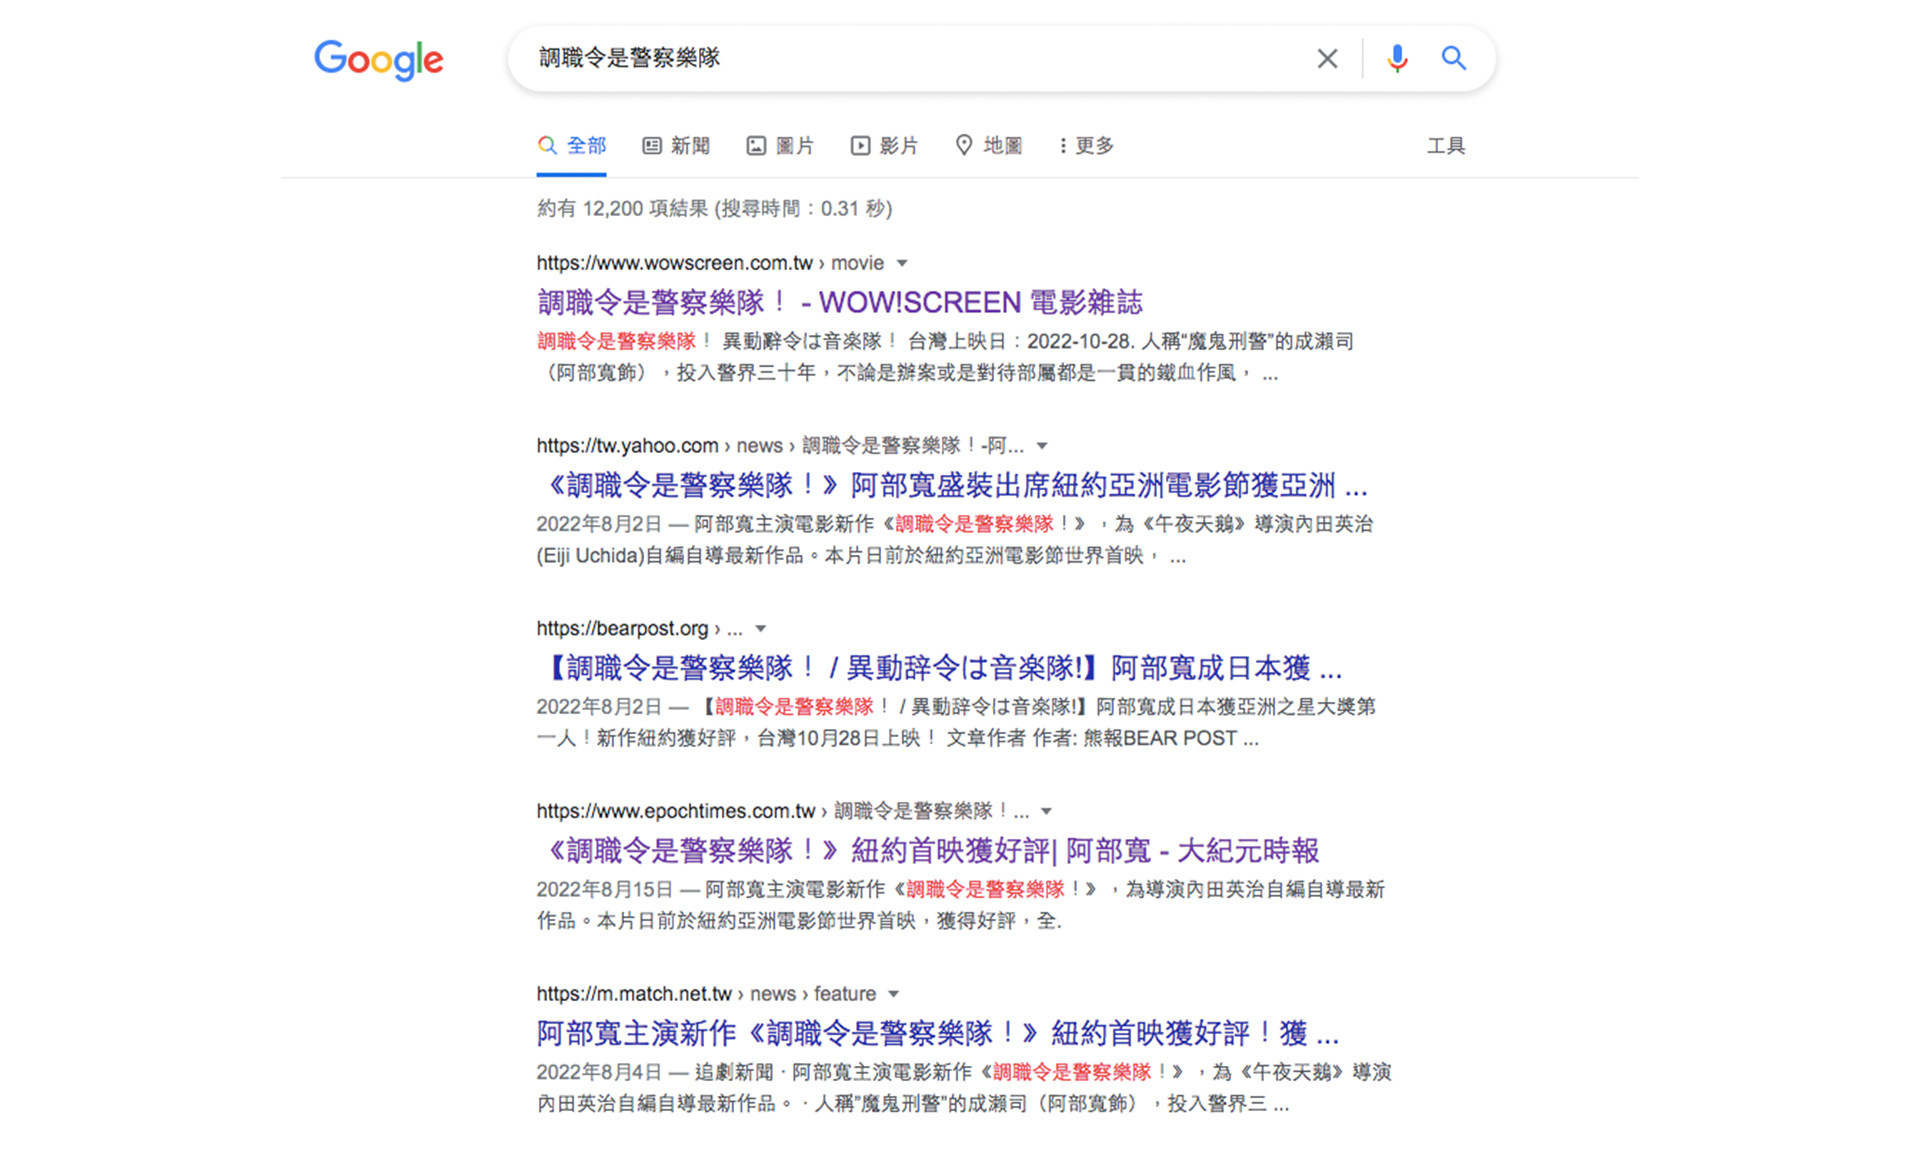 google-helpful-content-update-example 濫用SEO網頁例子